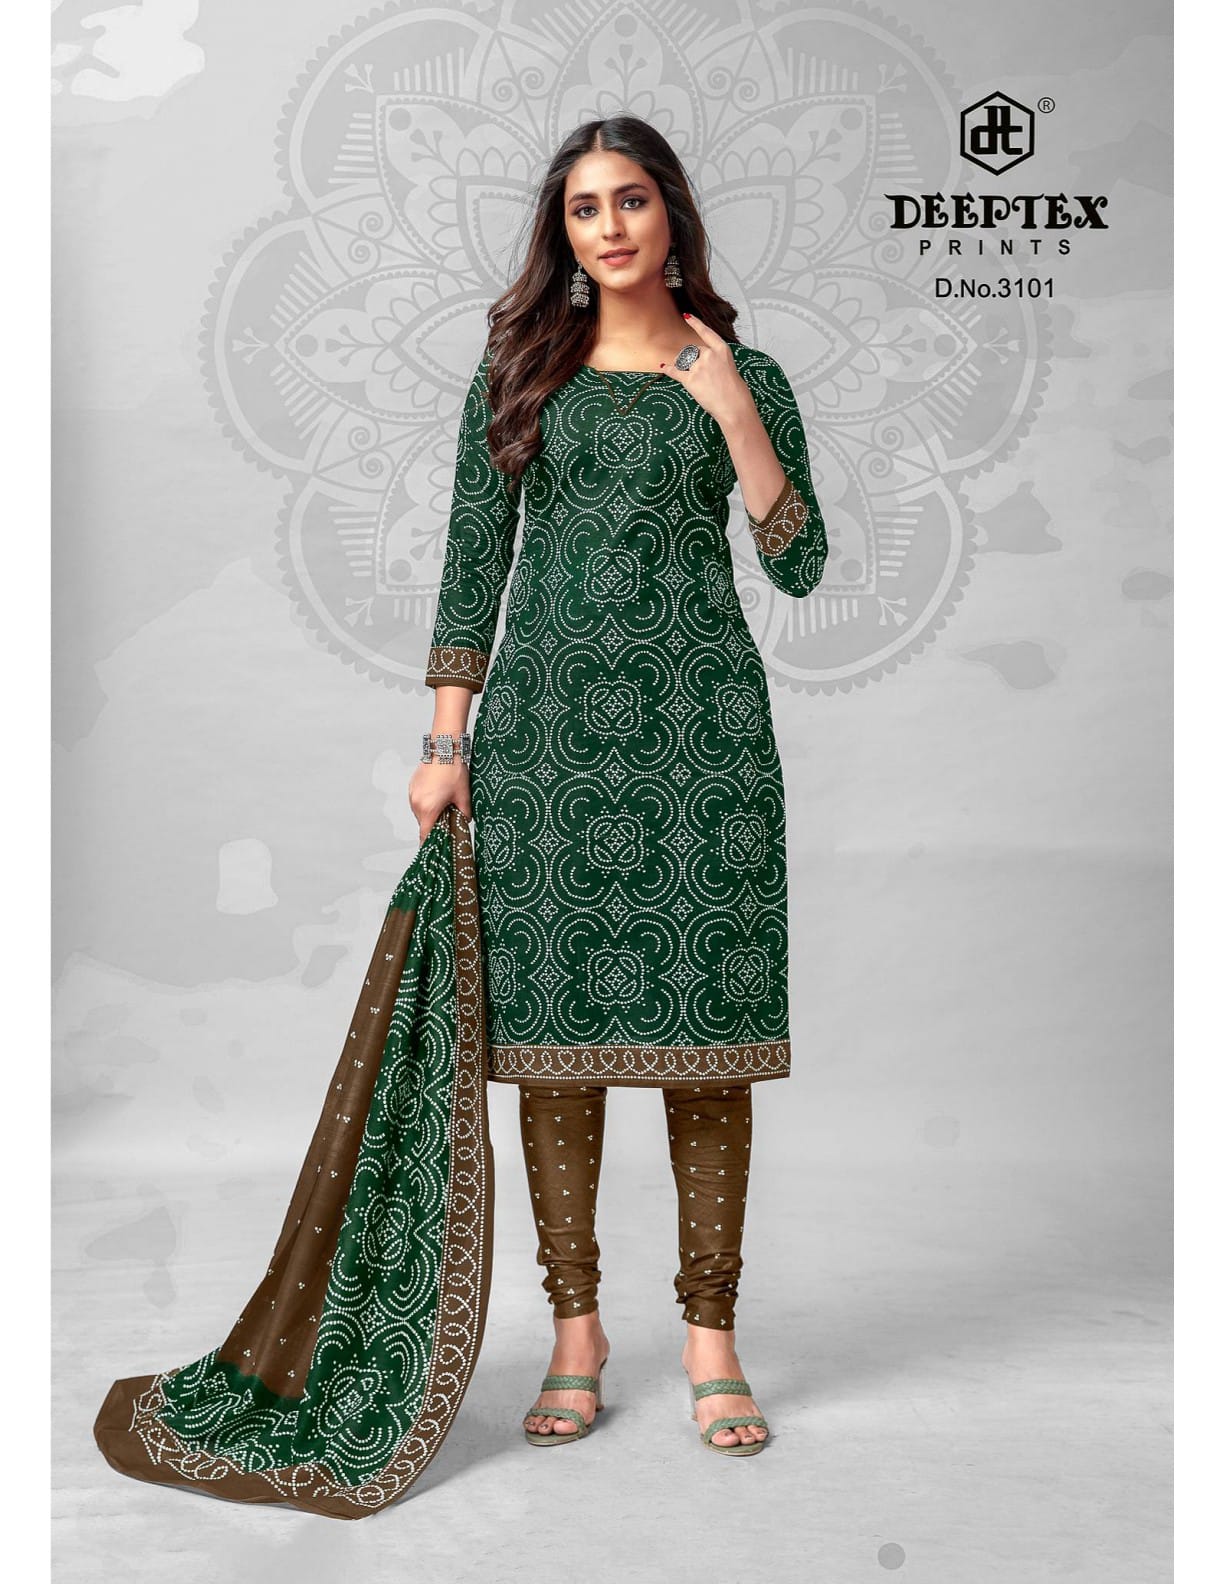 Deeptex Prints Classic Chunarris Vol 31 Pure Cotton Printed Dress Material Manufacturer In Jetpur - jilaniwholesalesuit